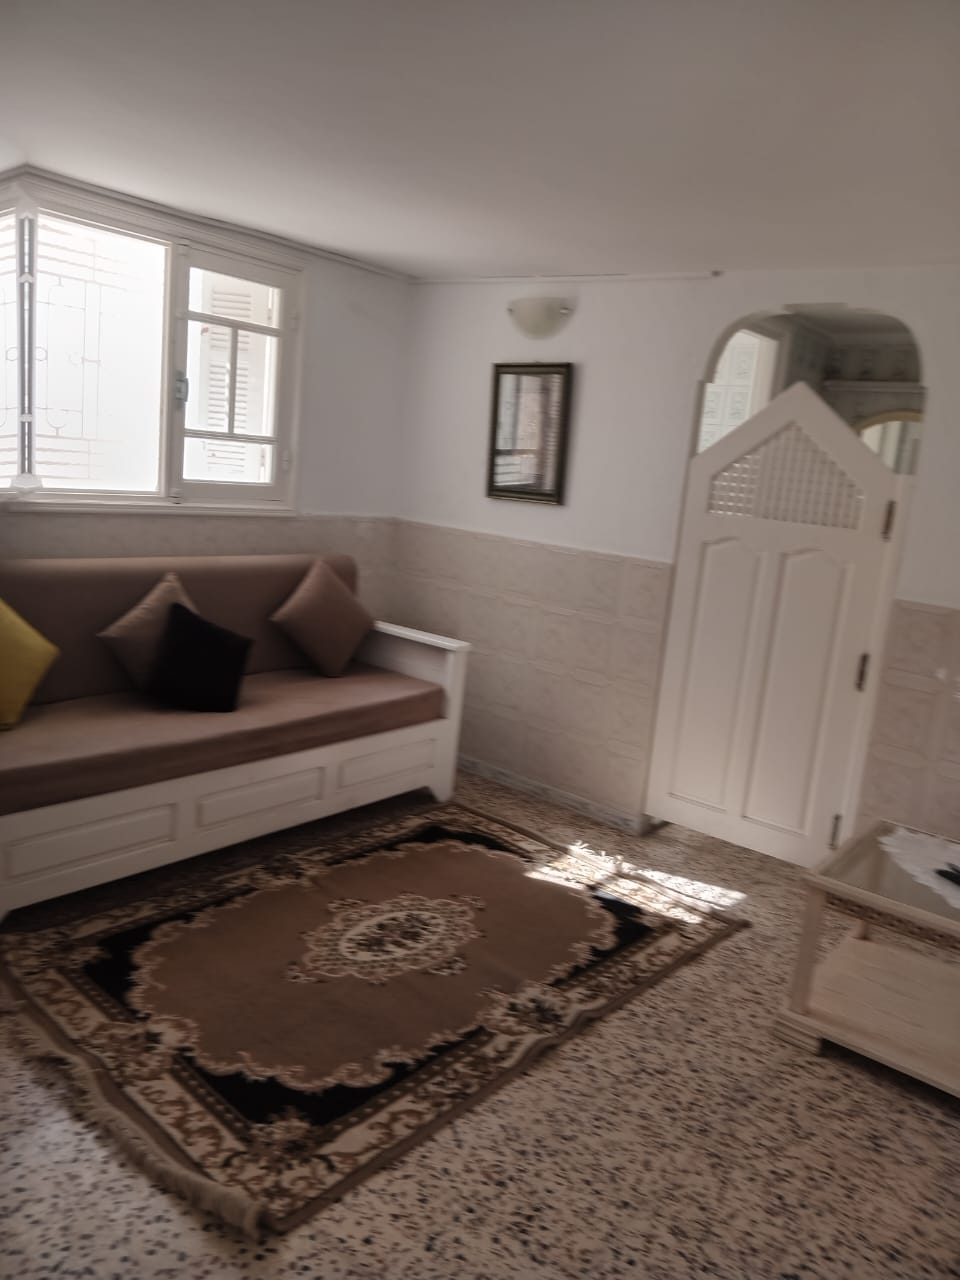 Mahdia Mahdia Hiboun Location Appart. 1 pice Un bel appartement meubl  mahdia